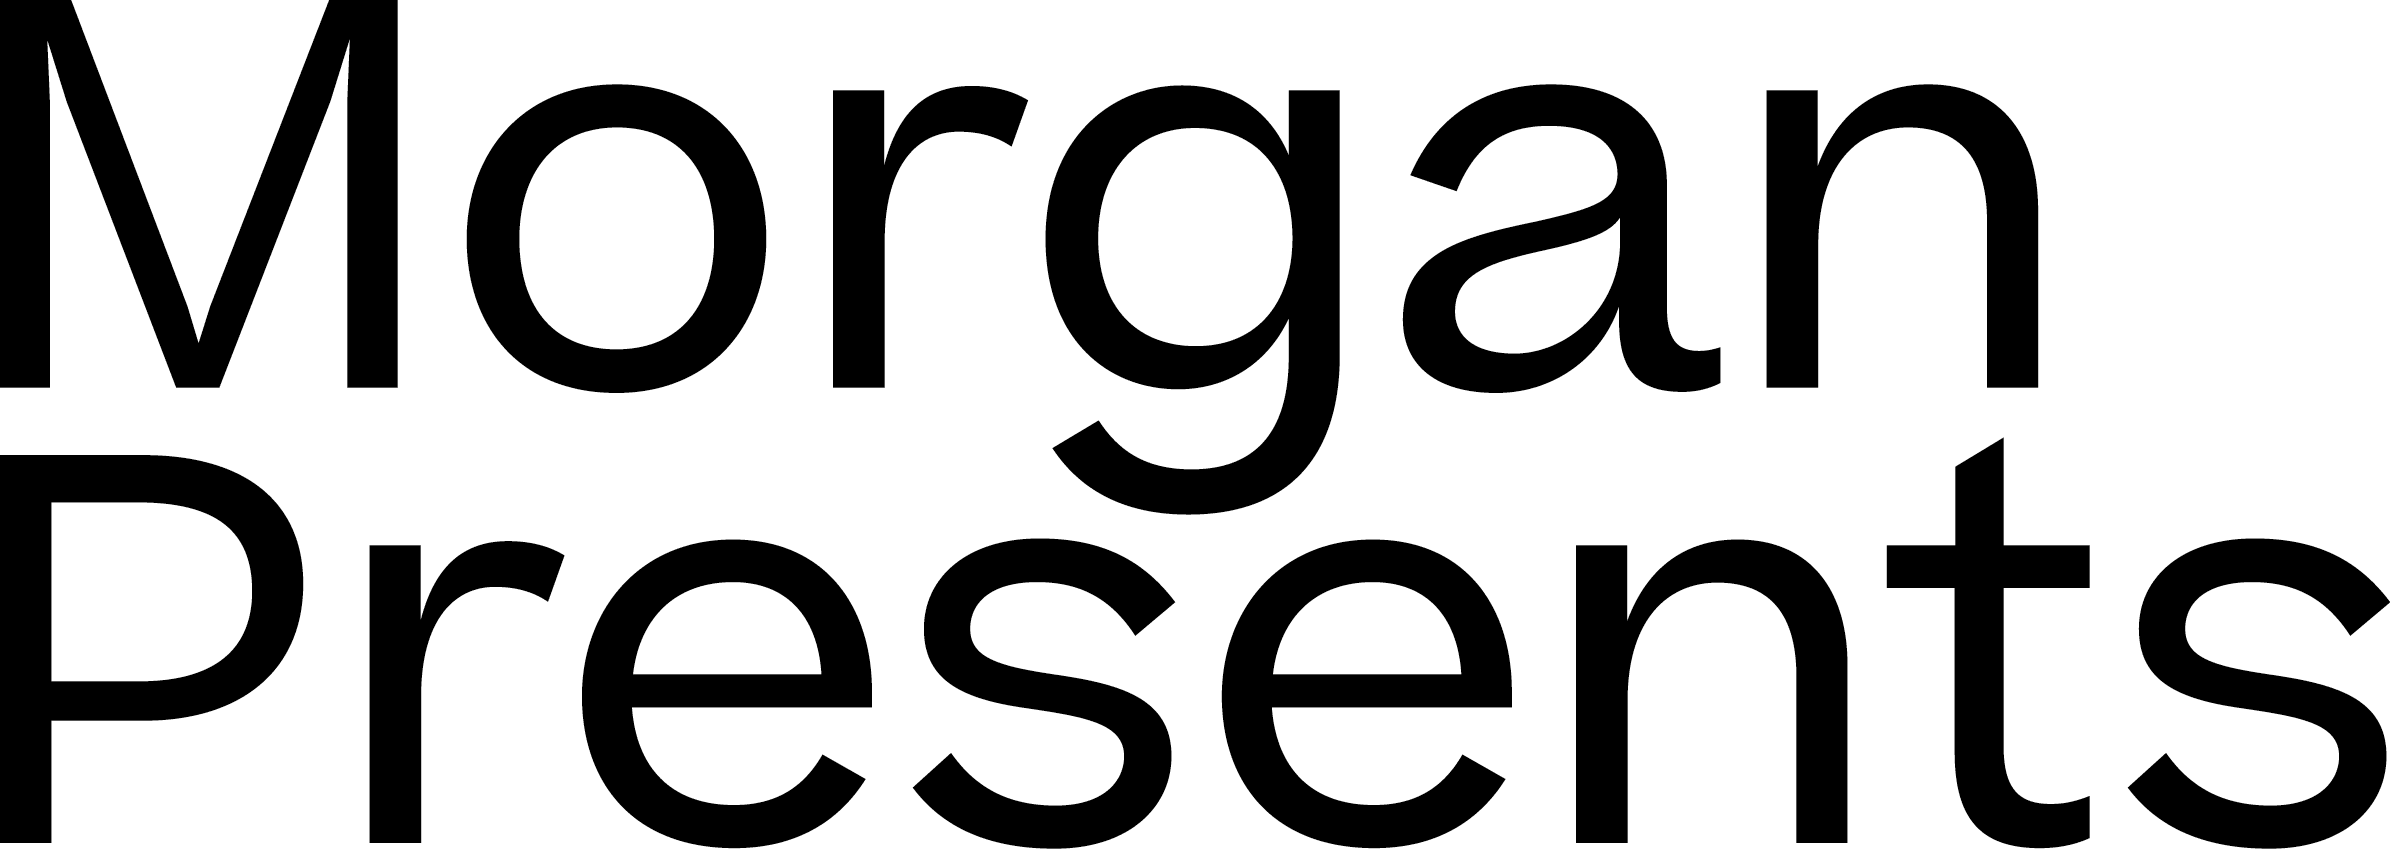 Morgan Presents company logo